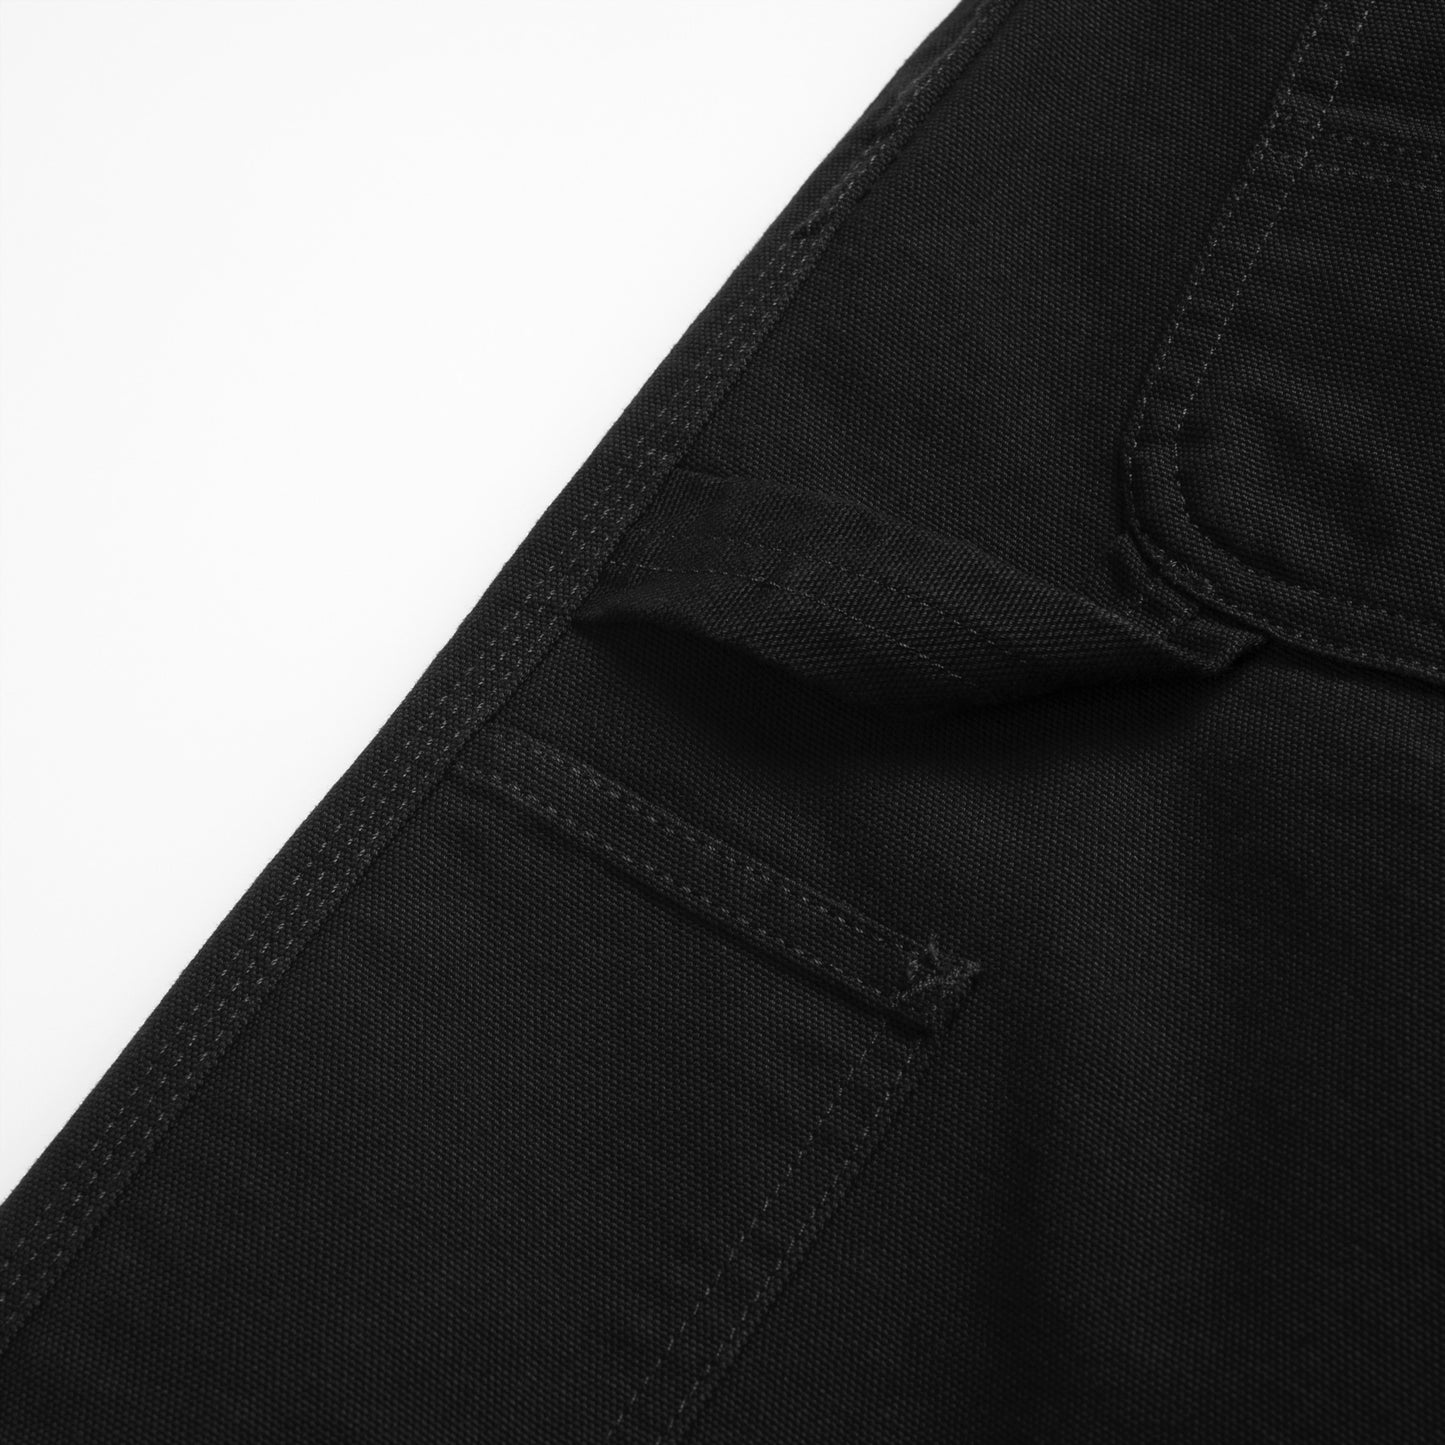 Carhartt WIP Single Knee Pant Black Rinsed. Foto de detalhe do bolso na lateral.